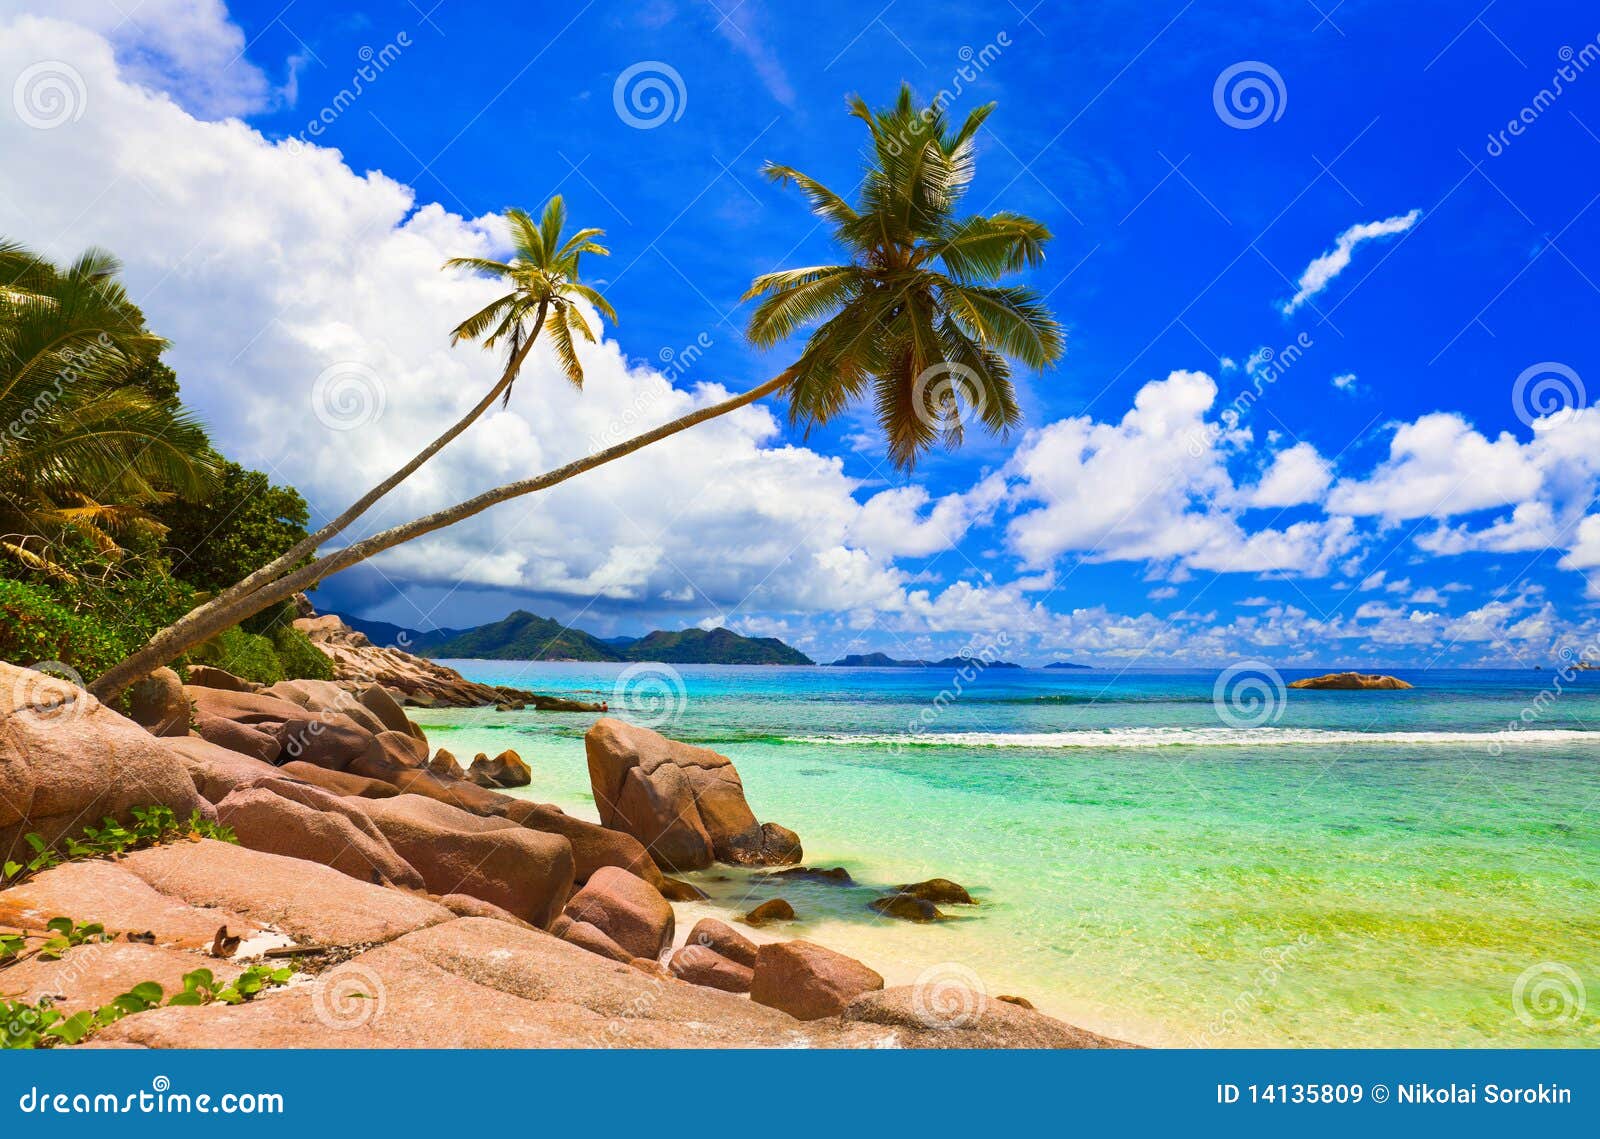 palms on beach at island la digue, seychelles